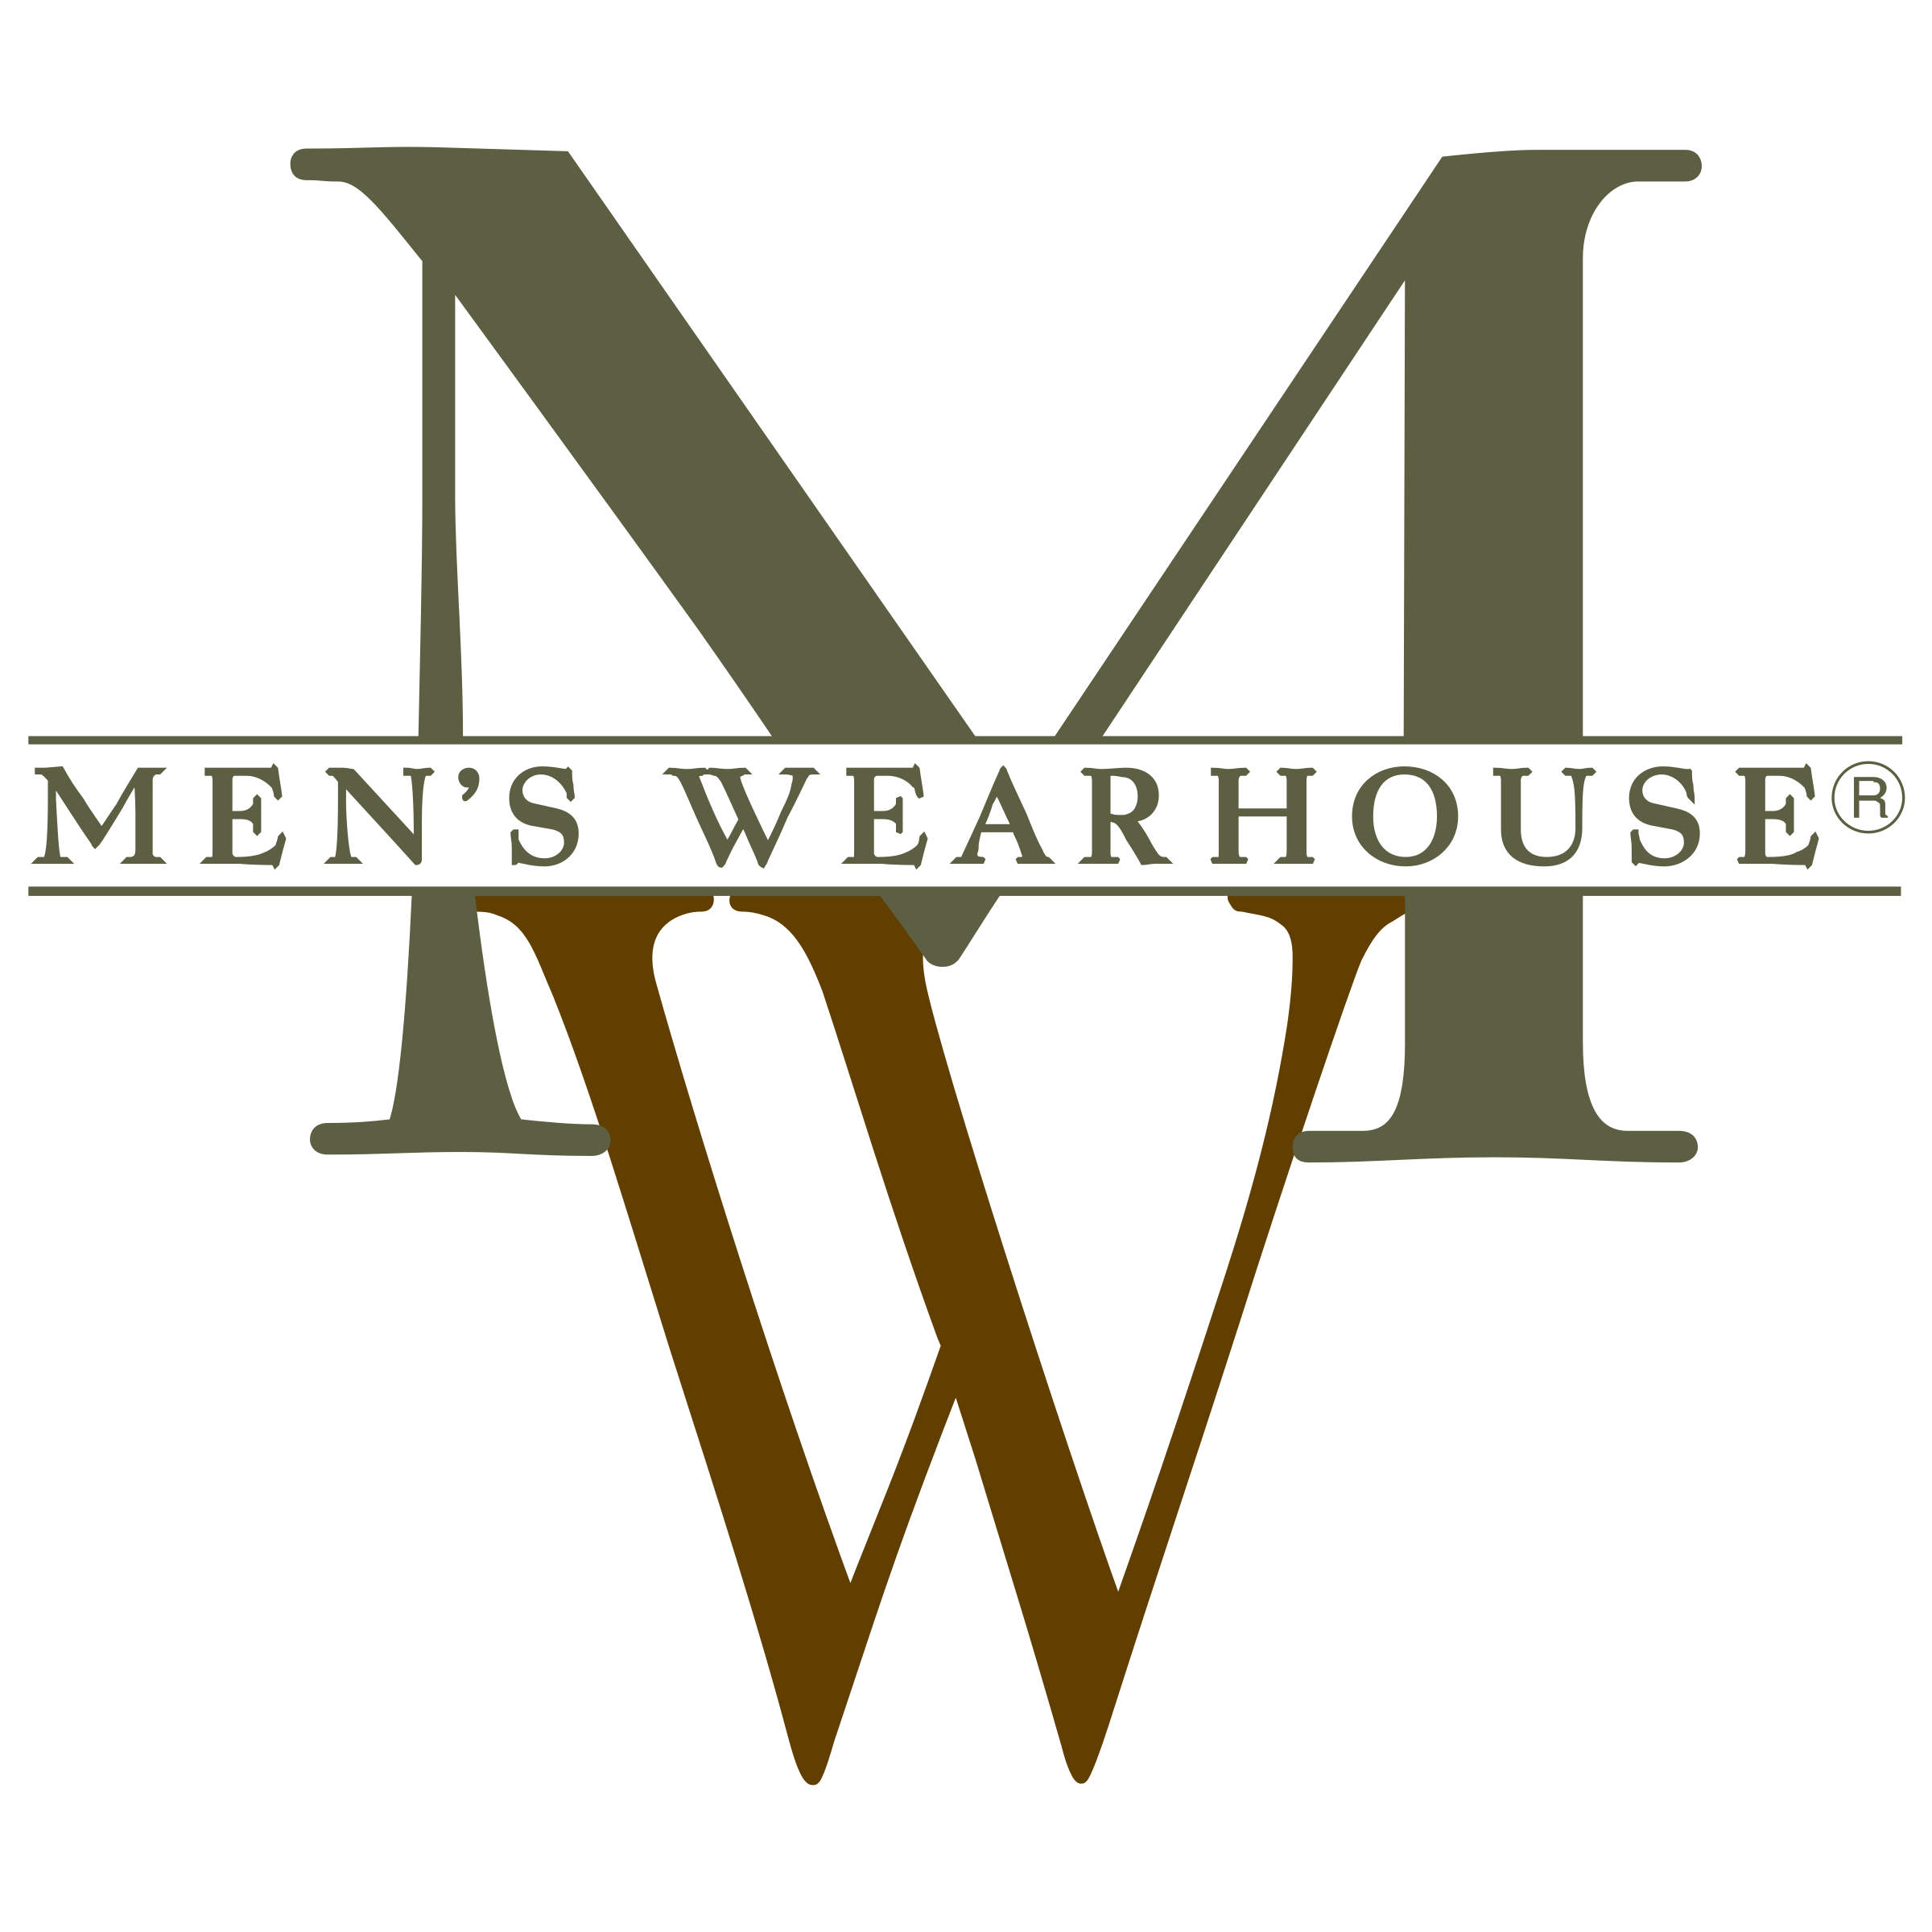 mens-wearhouse-logo-png-transparent